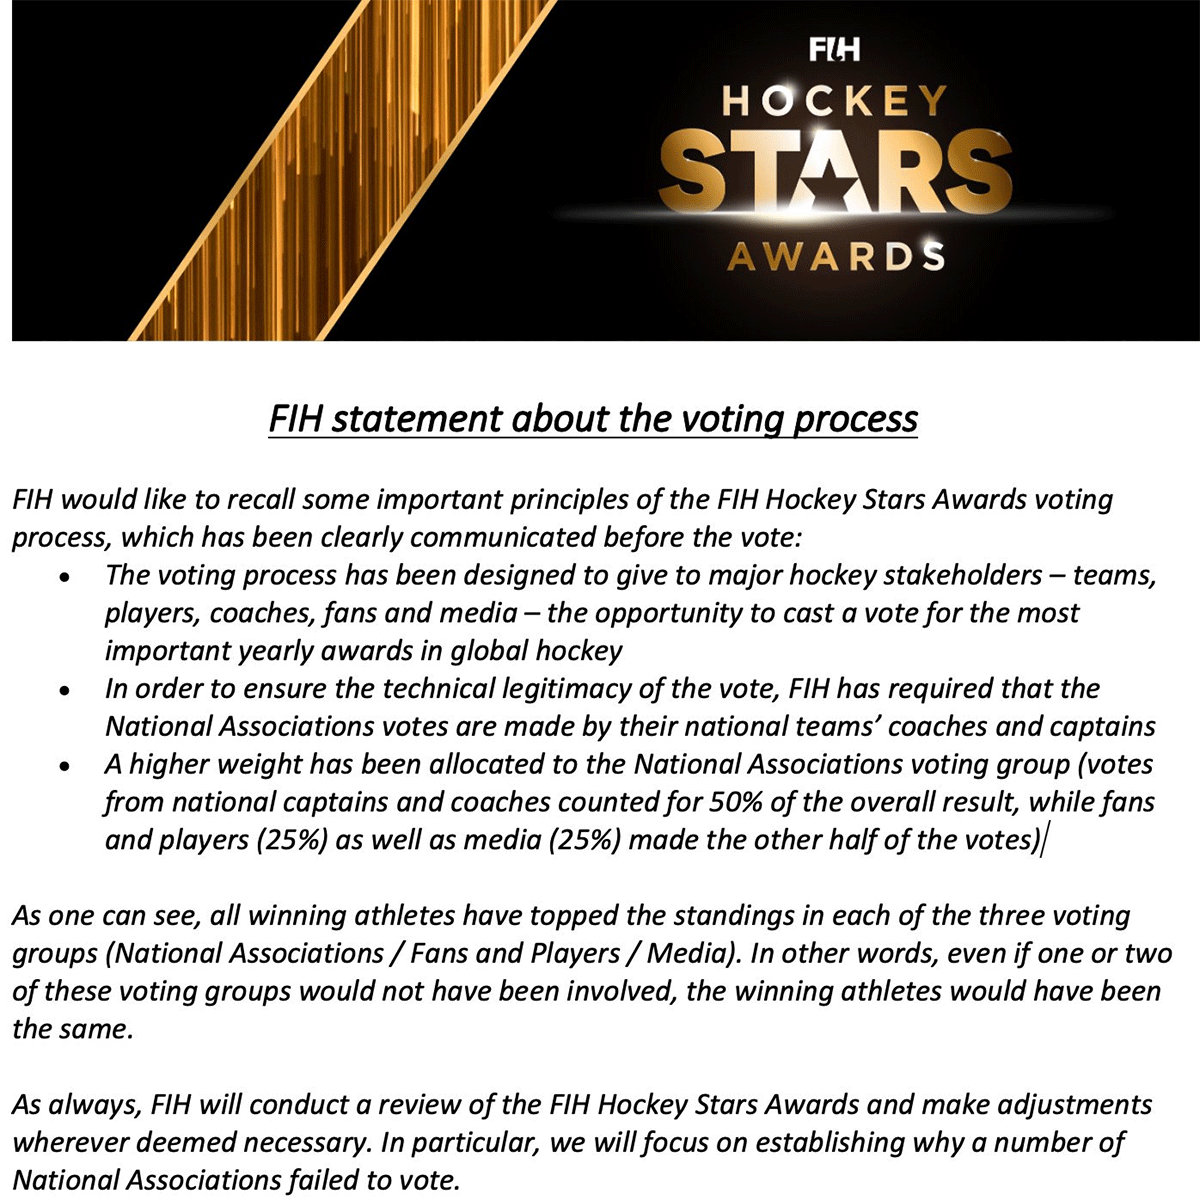 FFIH statement about the FIH Hockey Stars Awards voting process